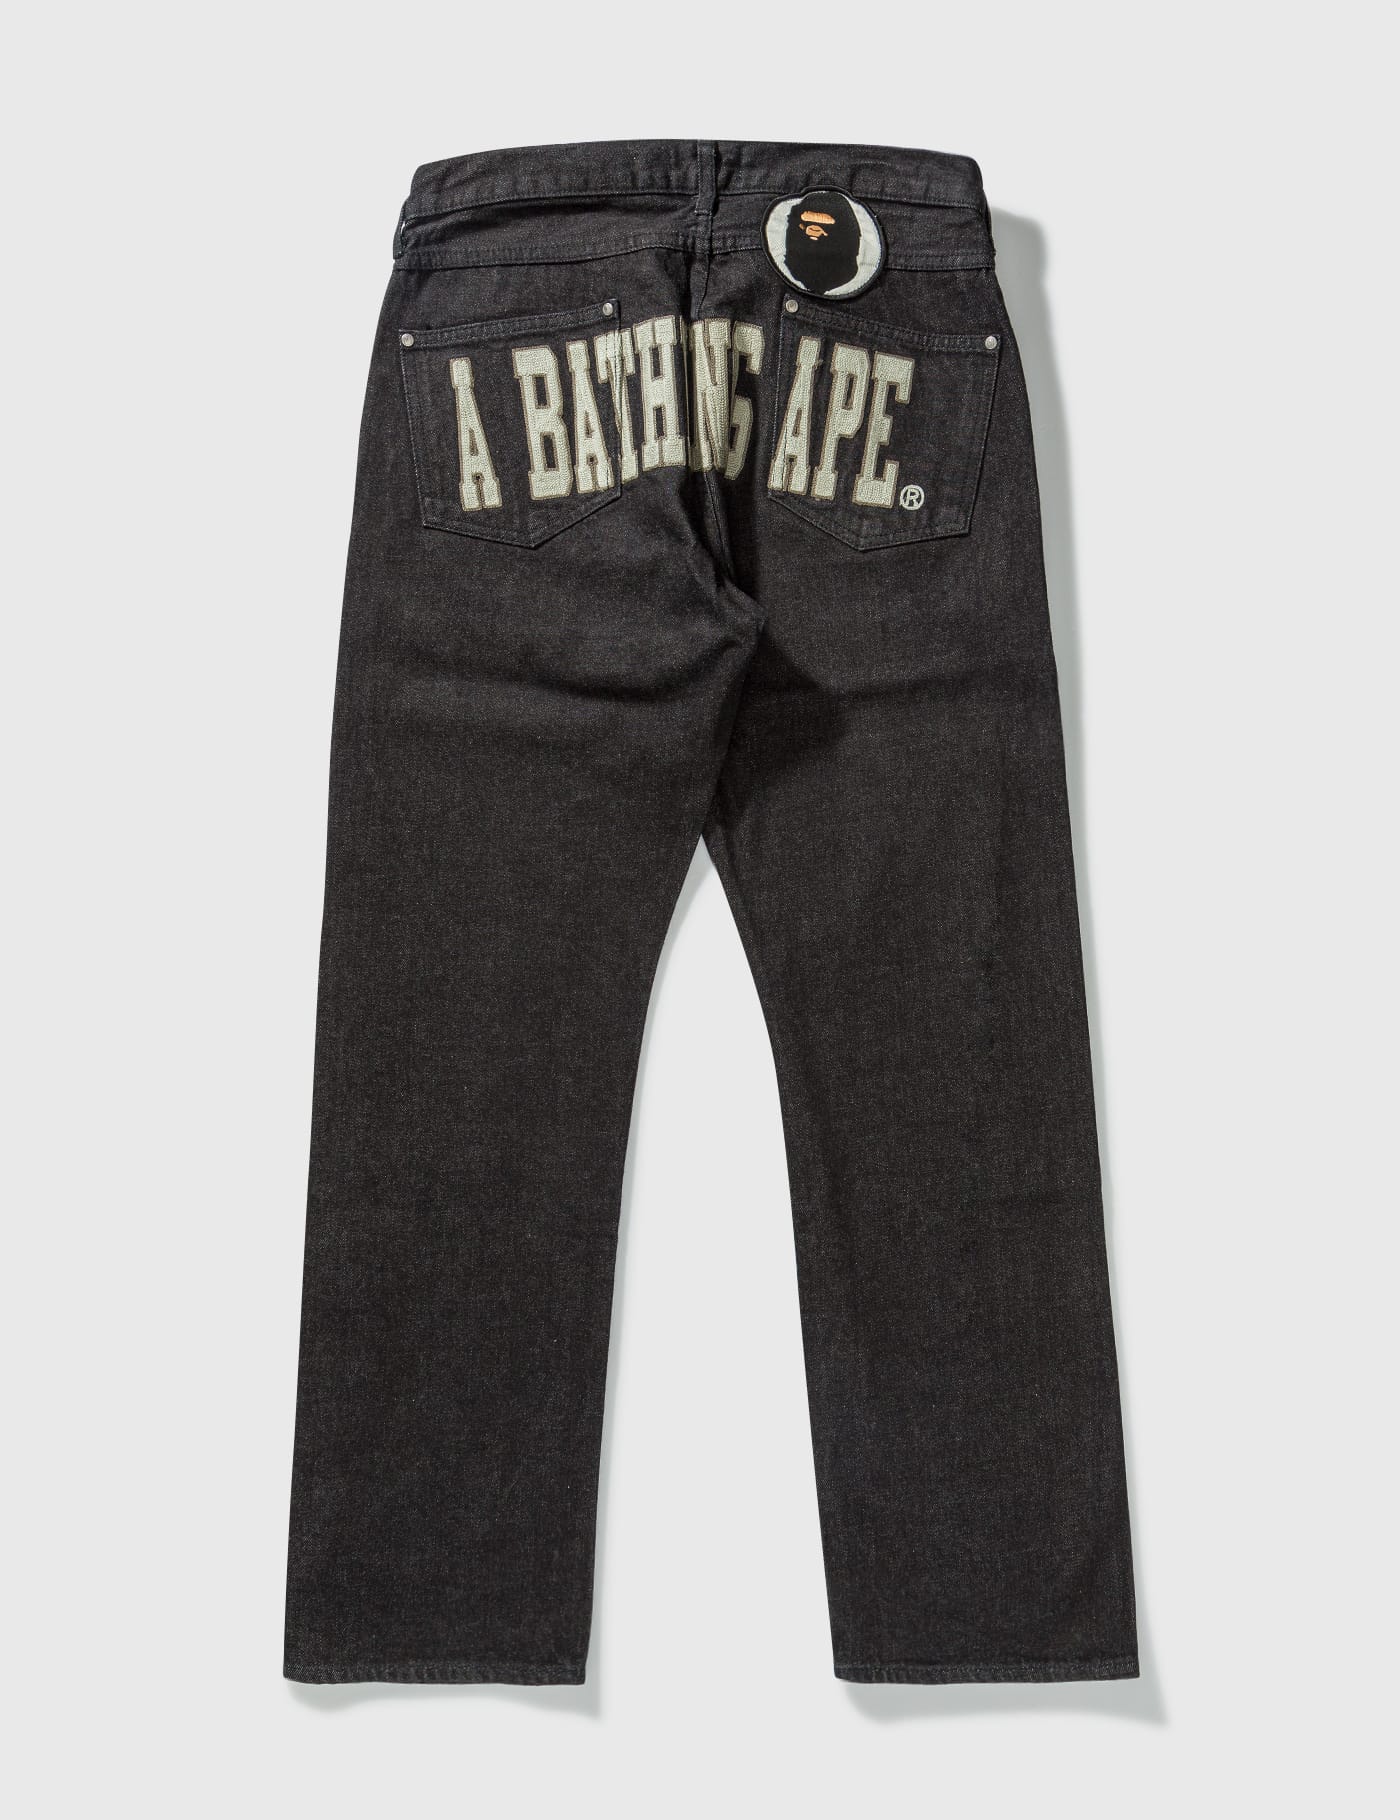 BAPE - Bape Embroidery Jeans | HBX - Globally Curated Fashion and